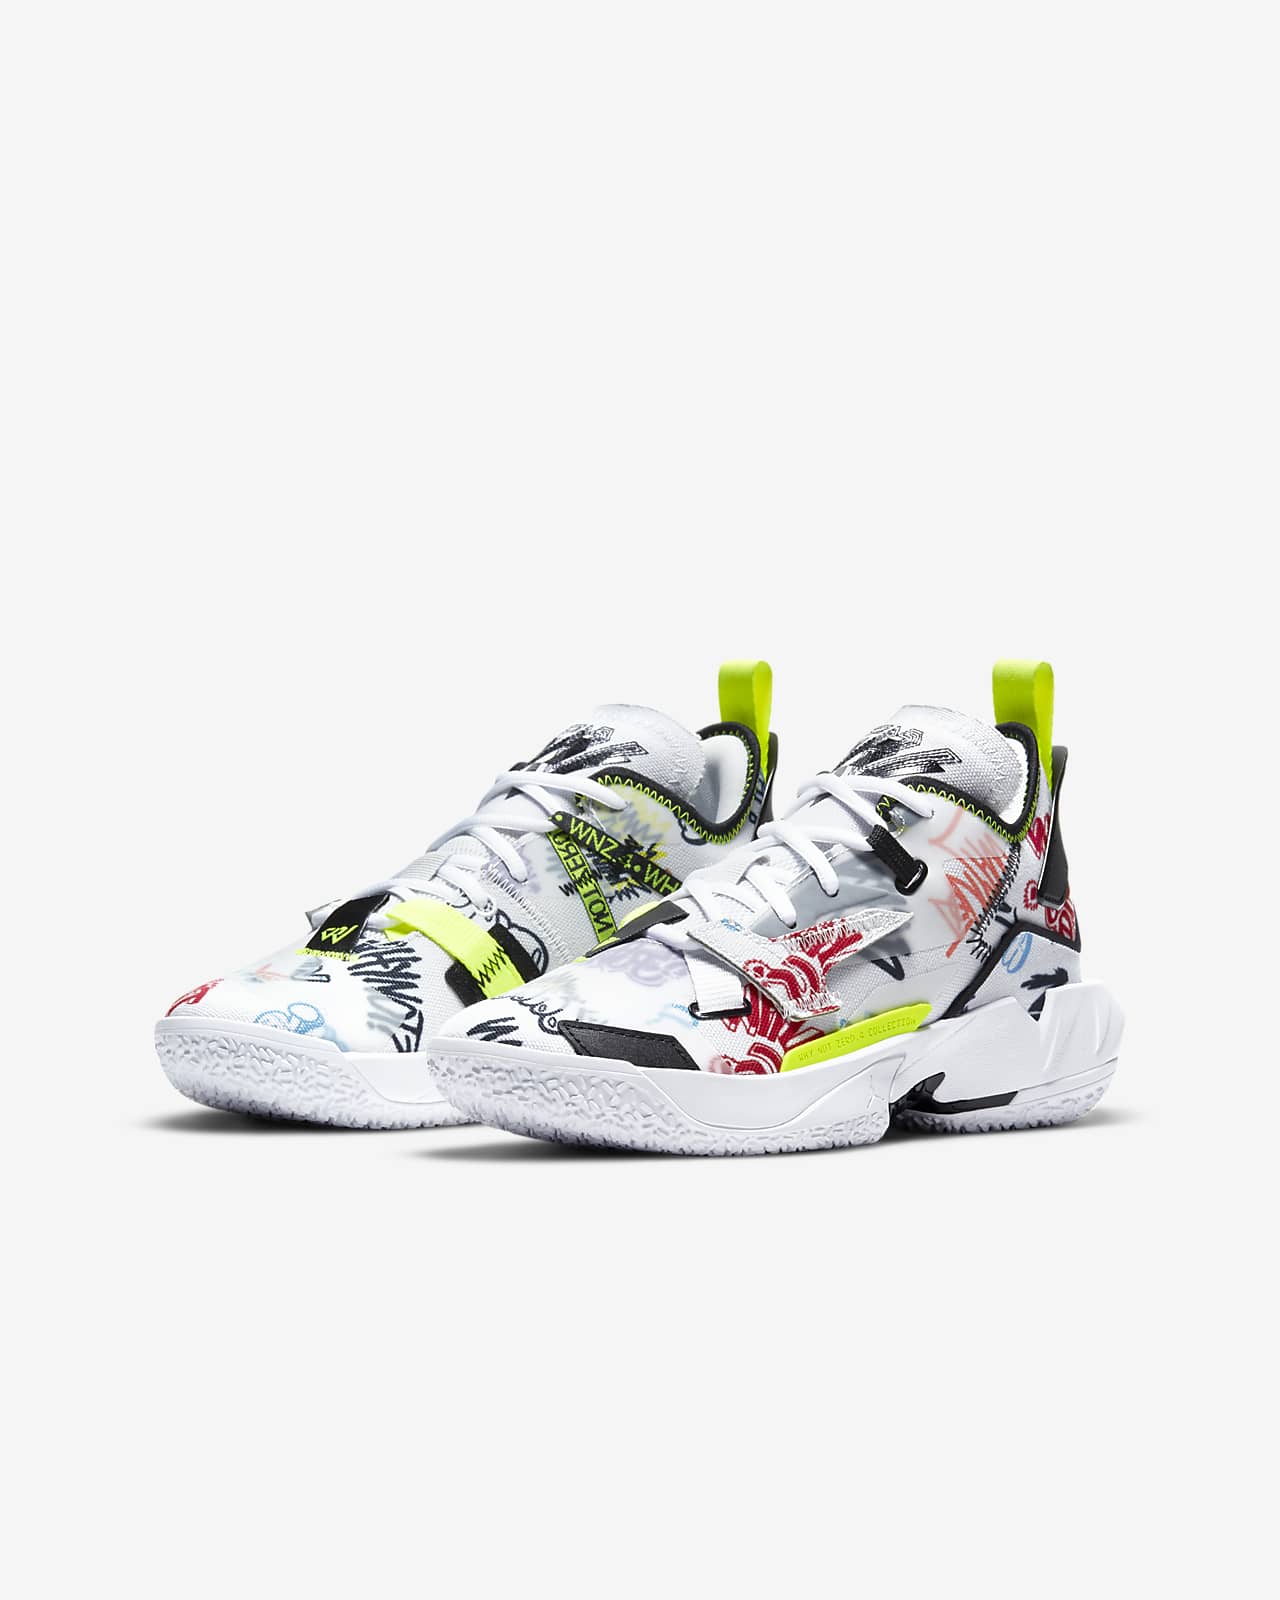 Zer0.4 Older Kids' Basketball Shoe. Nike ID